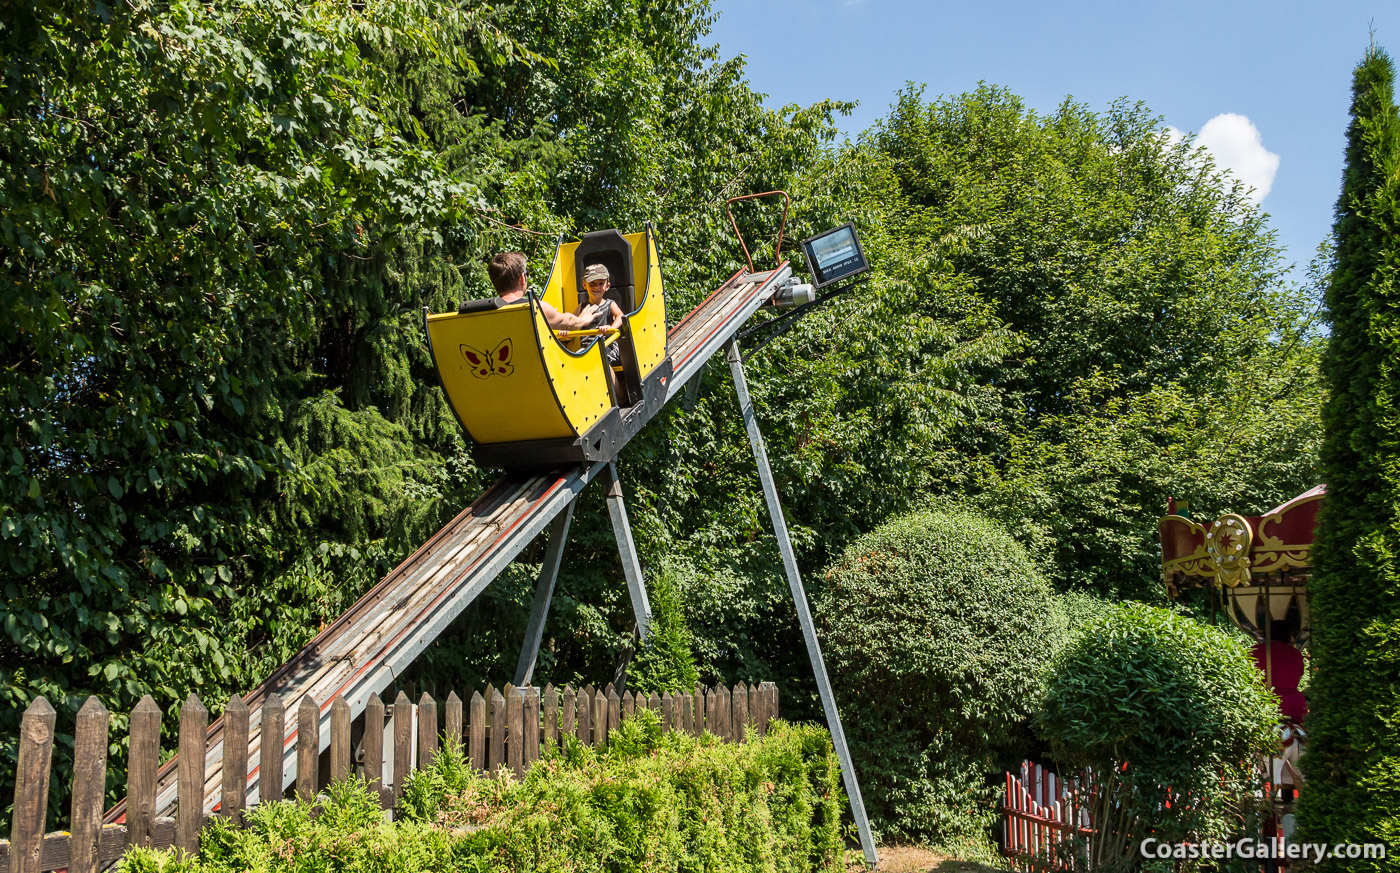 Butterfly Model roller coaster at Skyline Park in Bad Wrishofen, Bavaria, Germany